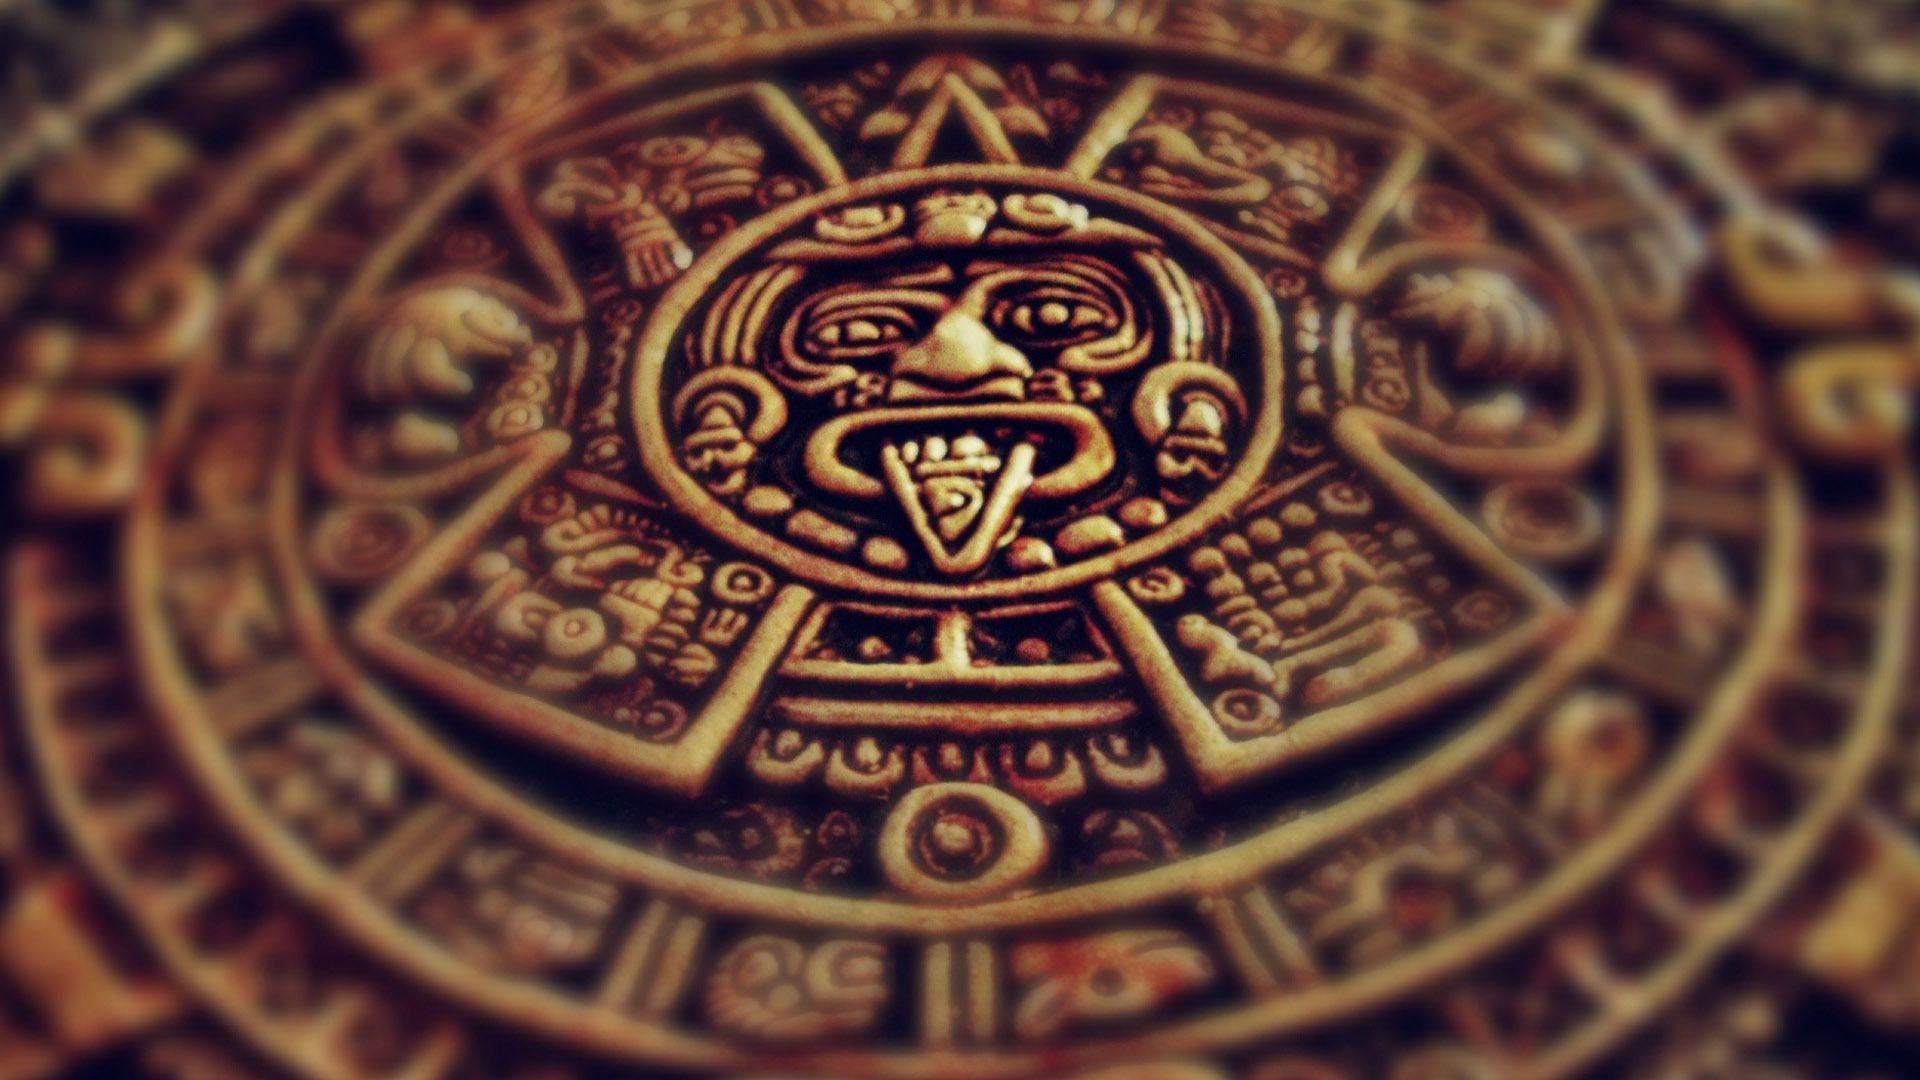 Mayans MC Wallpapers - Top Free Mayans MC Backgrounds ...